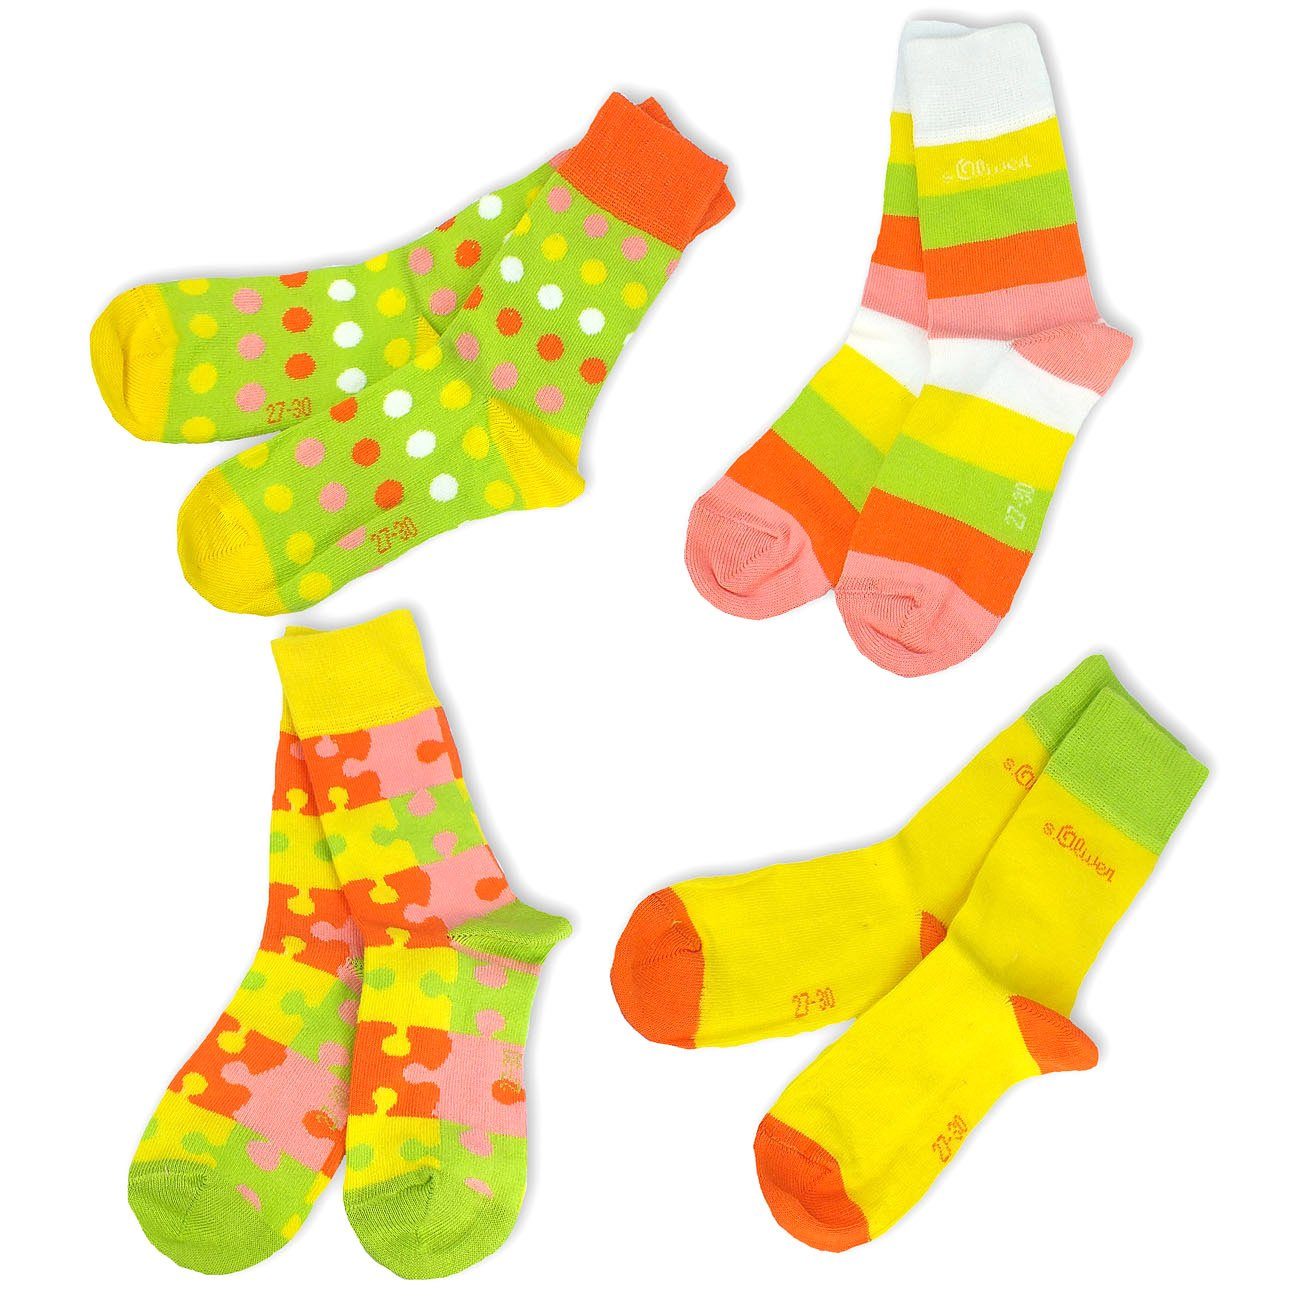 s.Oliver Langsocken S20227 (Set, 4-Paar, 4 Paar) Kinder Socken, Jungen & Mädchen mit Baumwolle, Kindersocken 80 gelb